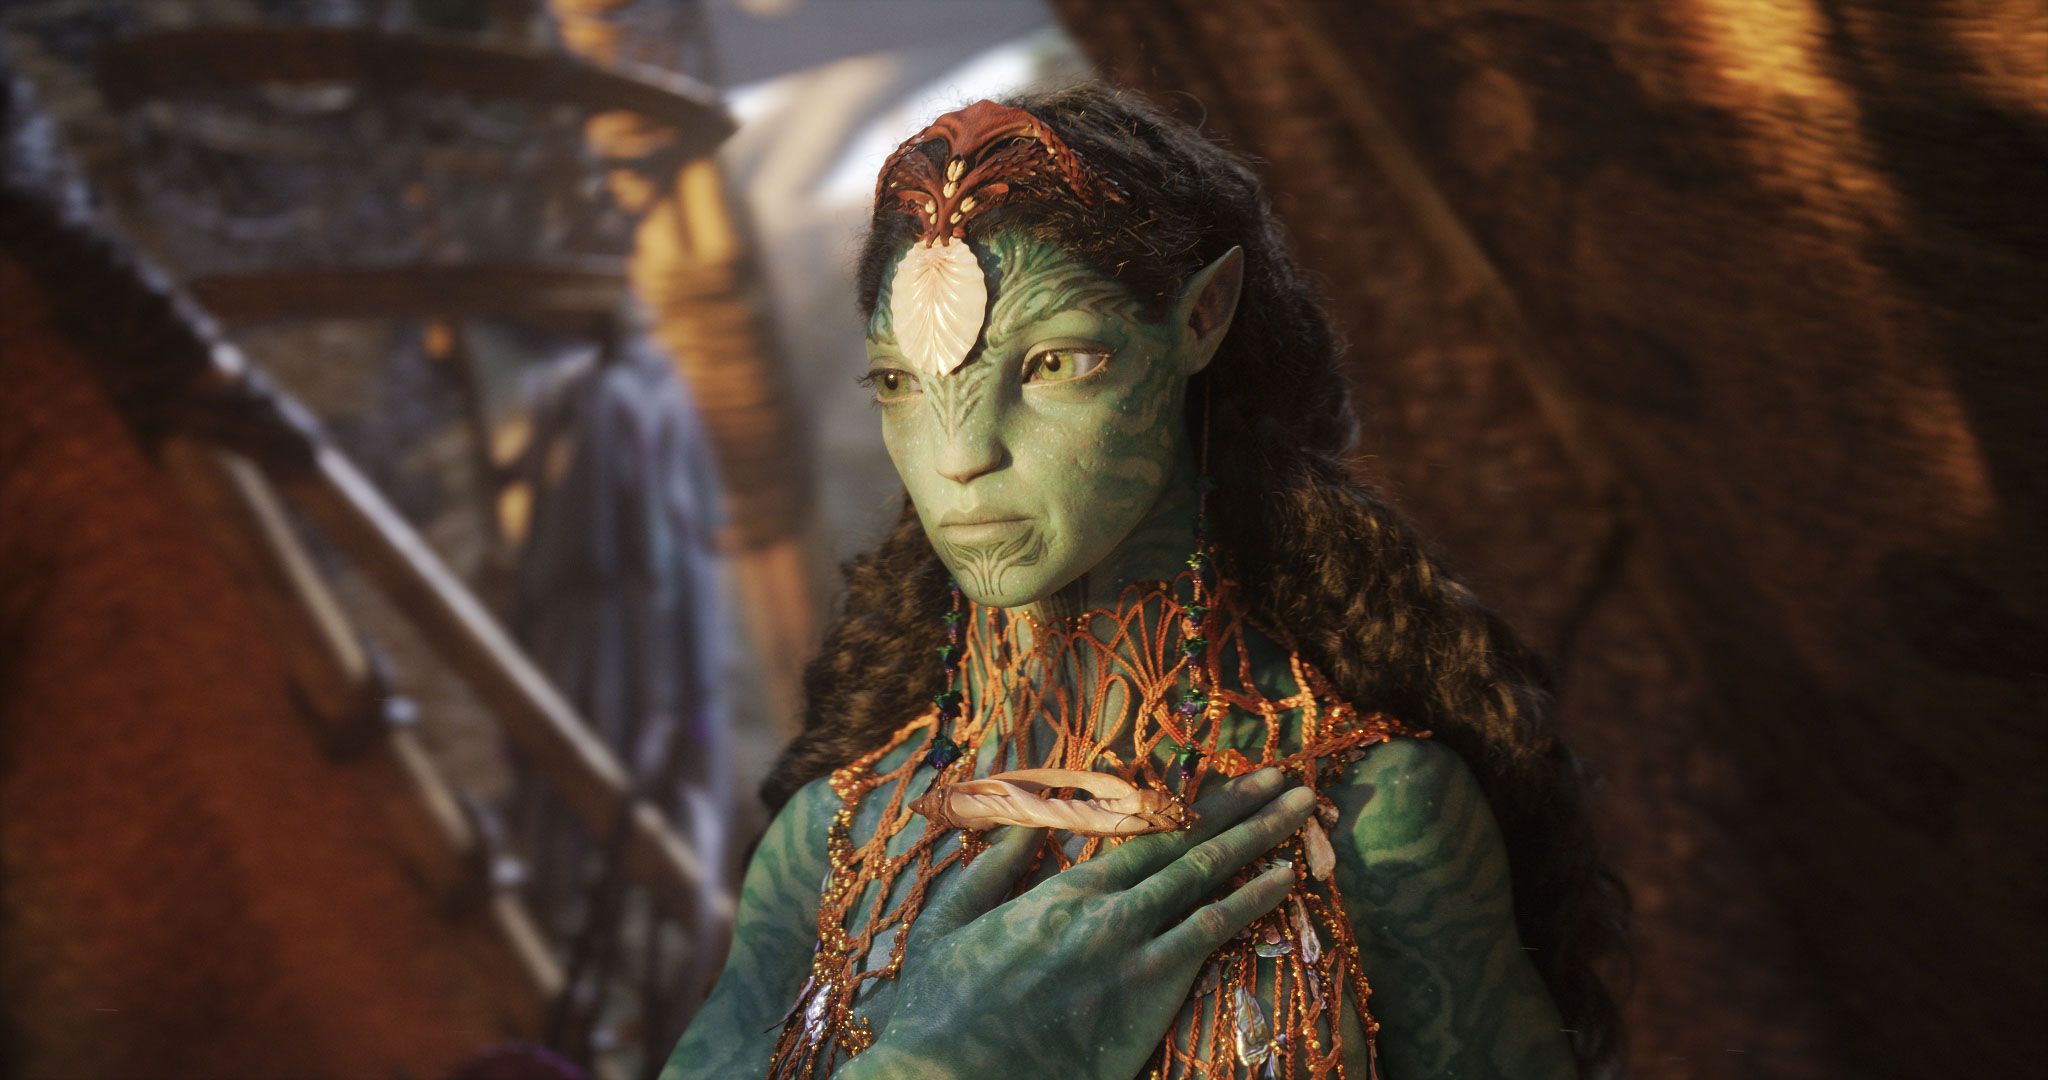 Avatar 2 star Kate Winslet shares character details